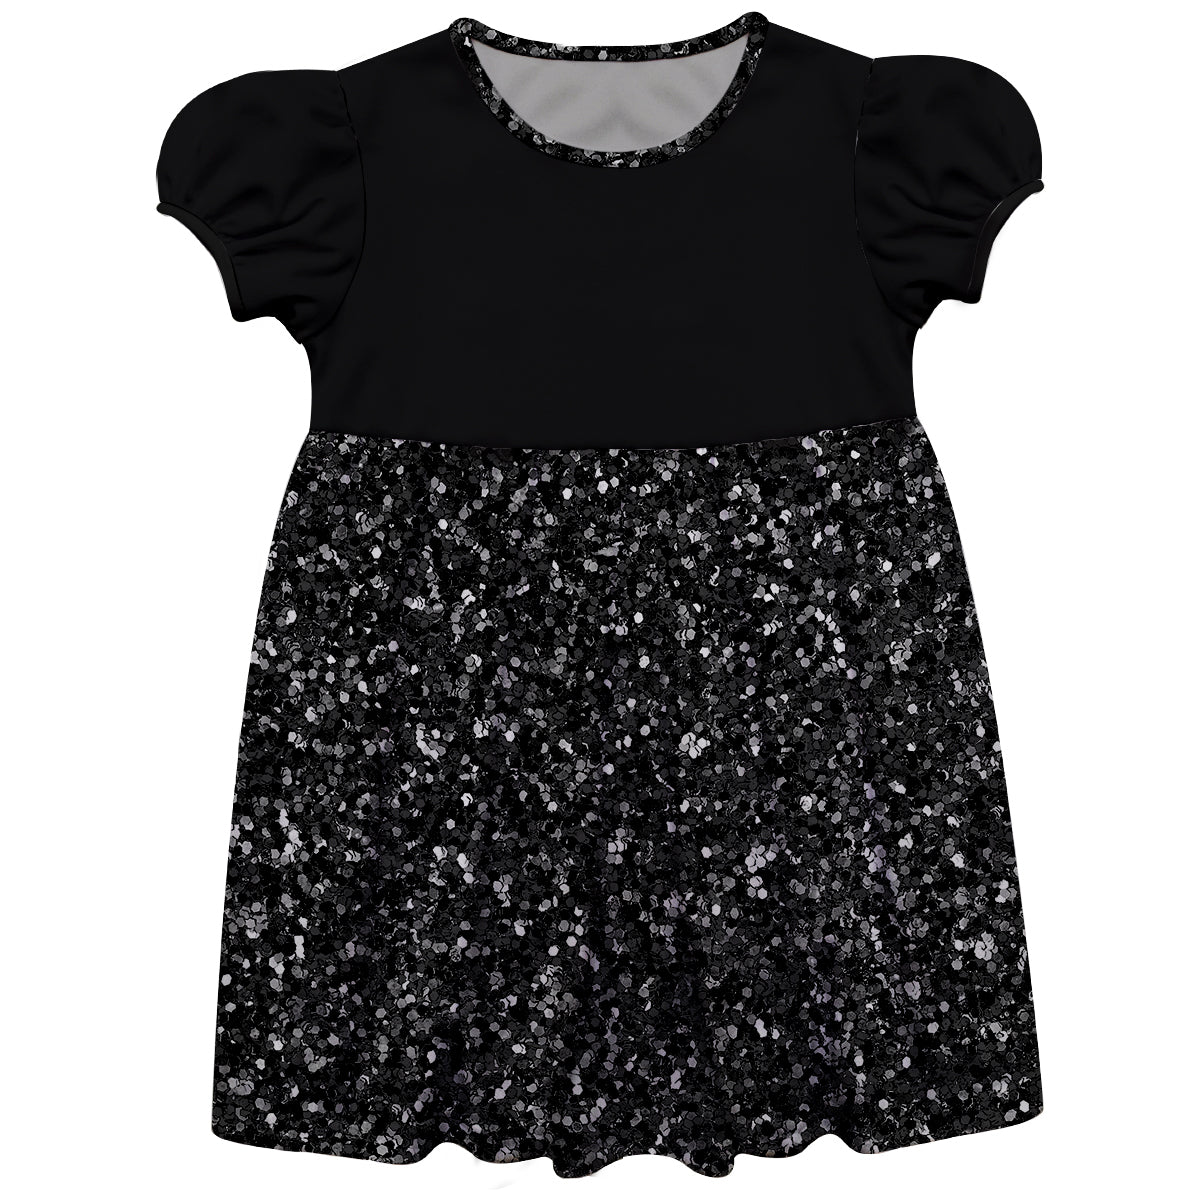 Buy Sequins Glitter Dress Kids online | Lazada.com.ph